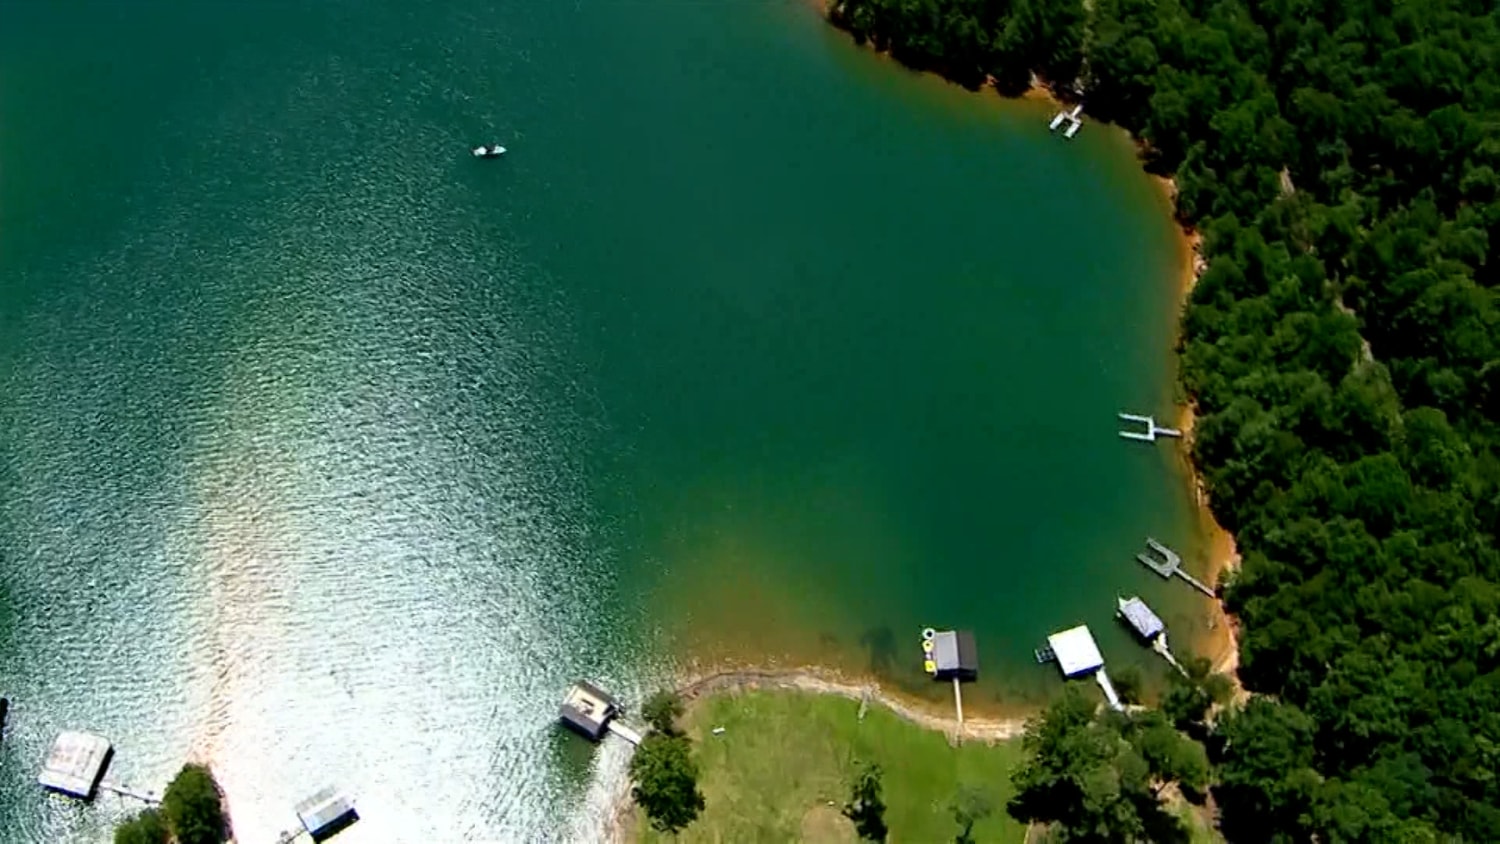 Man dies after being electrocuted at Georgia's Lake Lanier